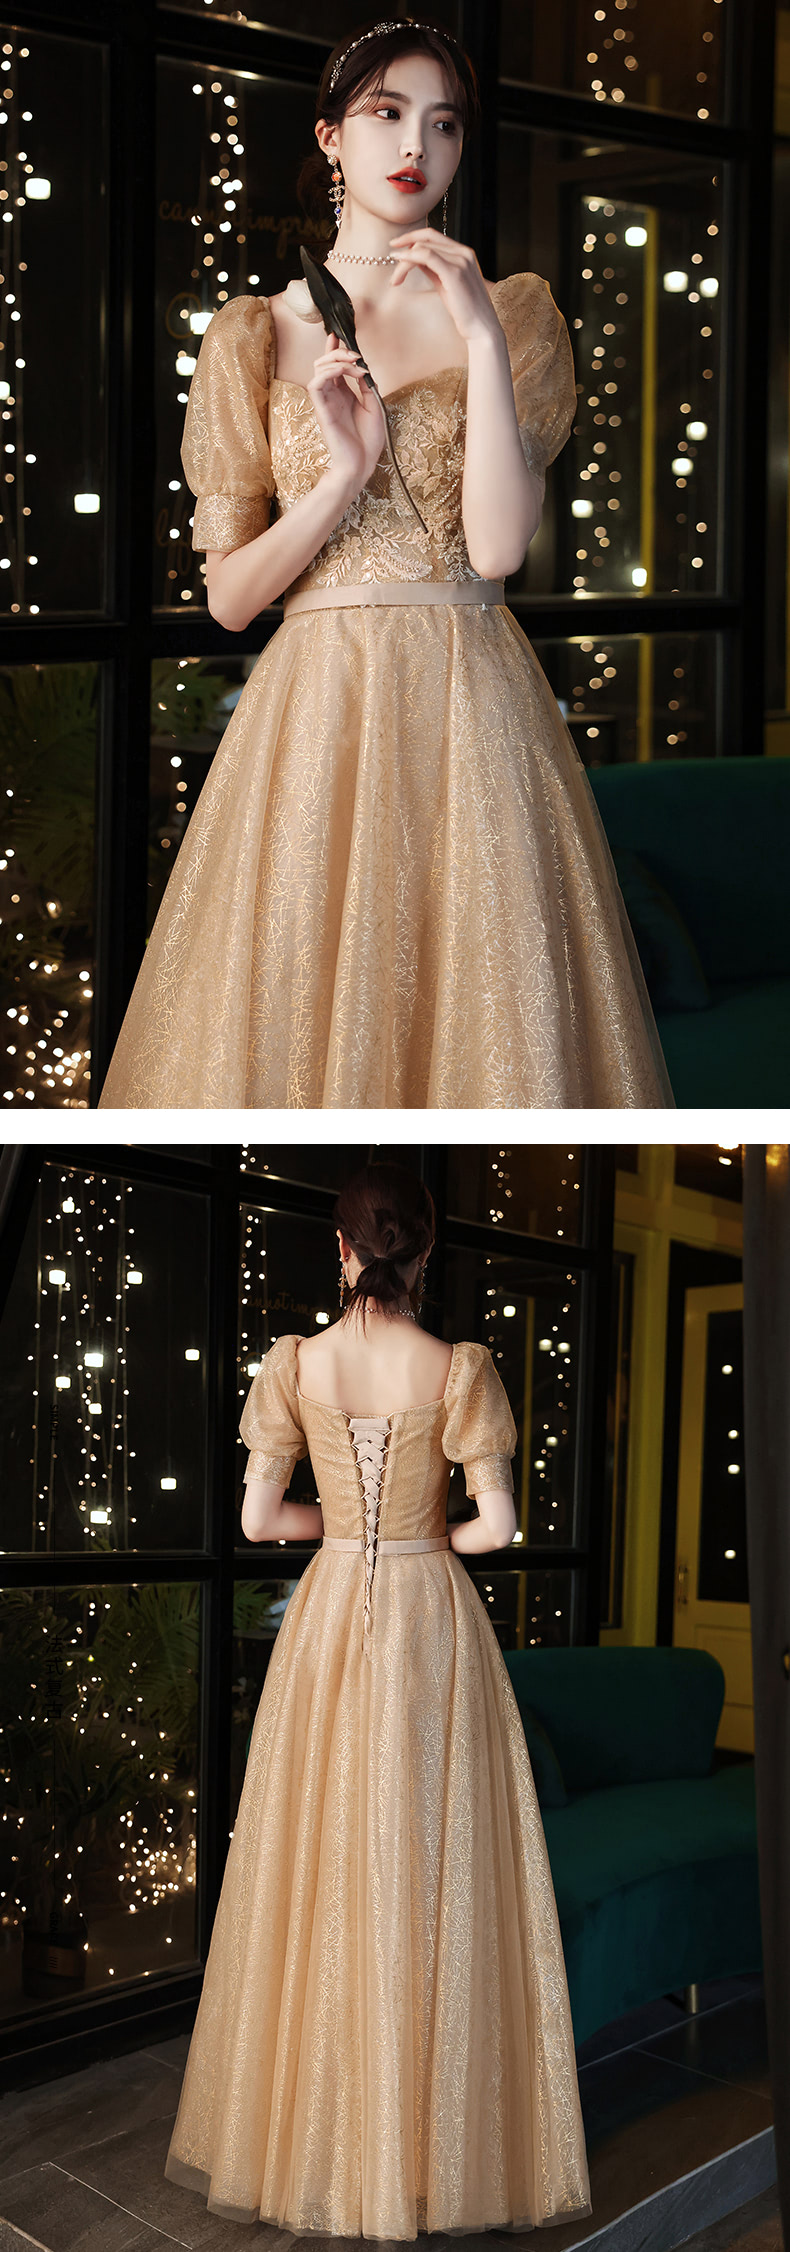 Square-Neckline-Short-Sleeve-Champagne-Prom-Evening-Dress13.jpg